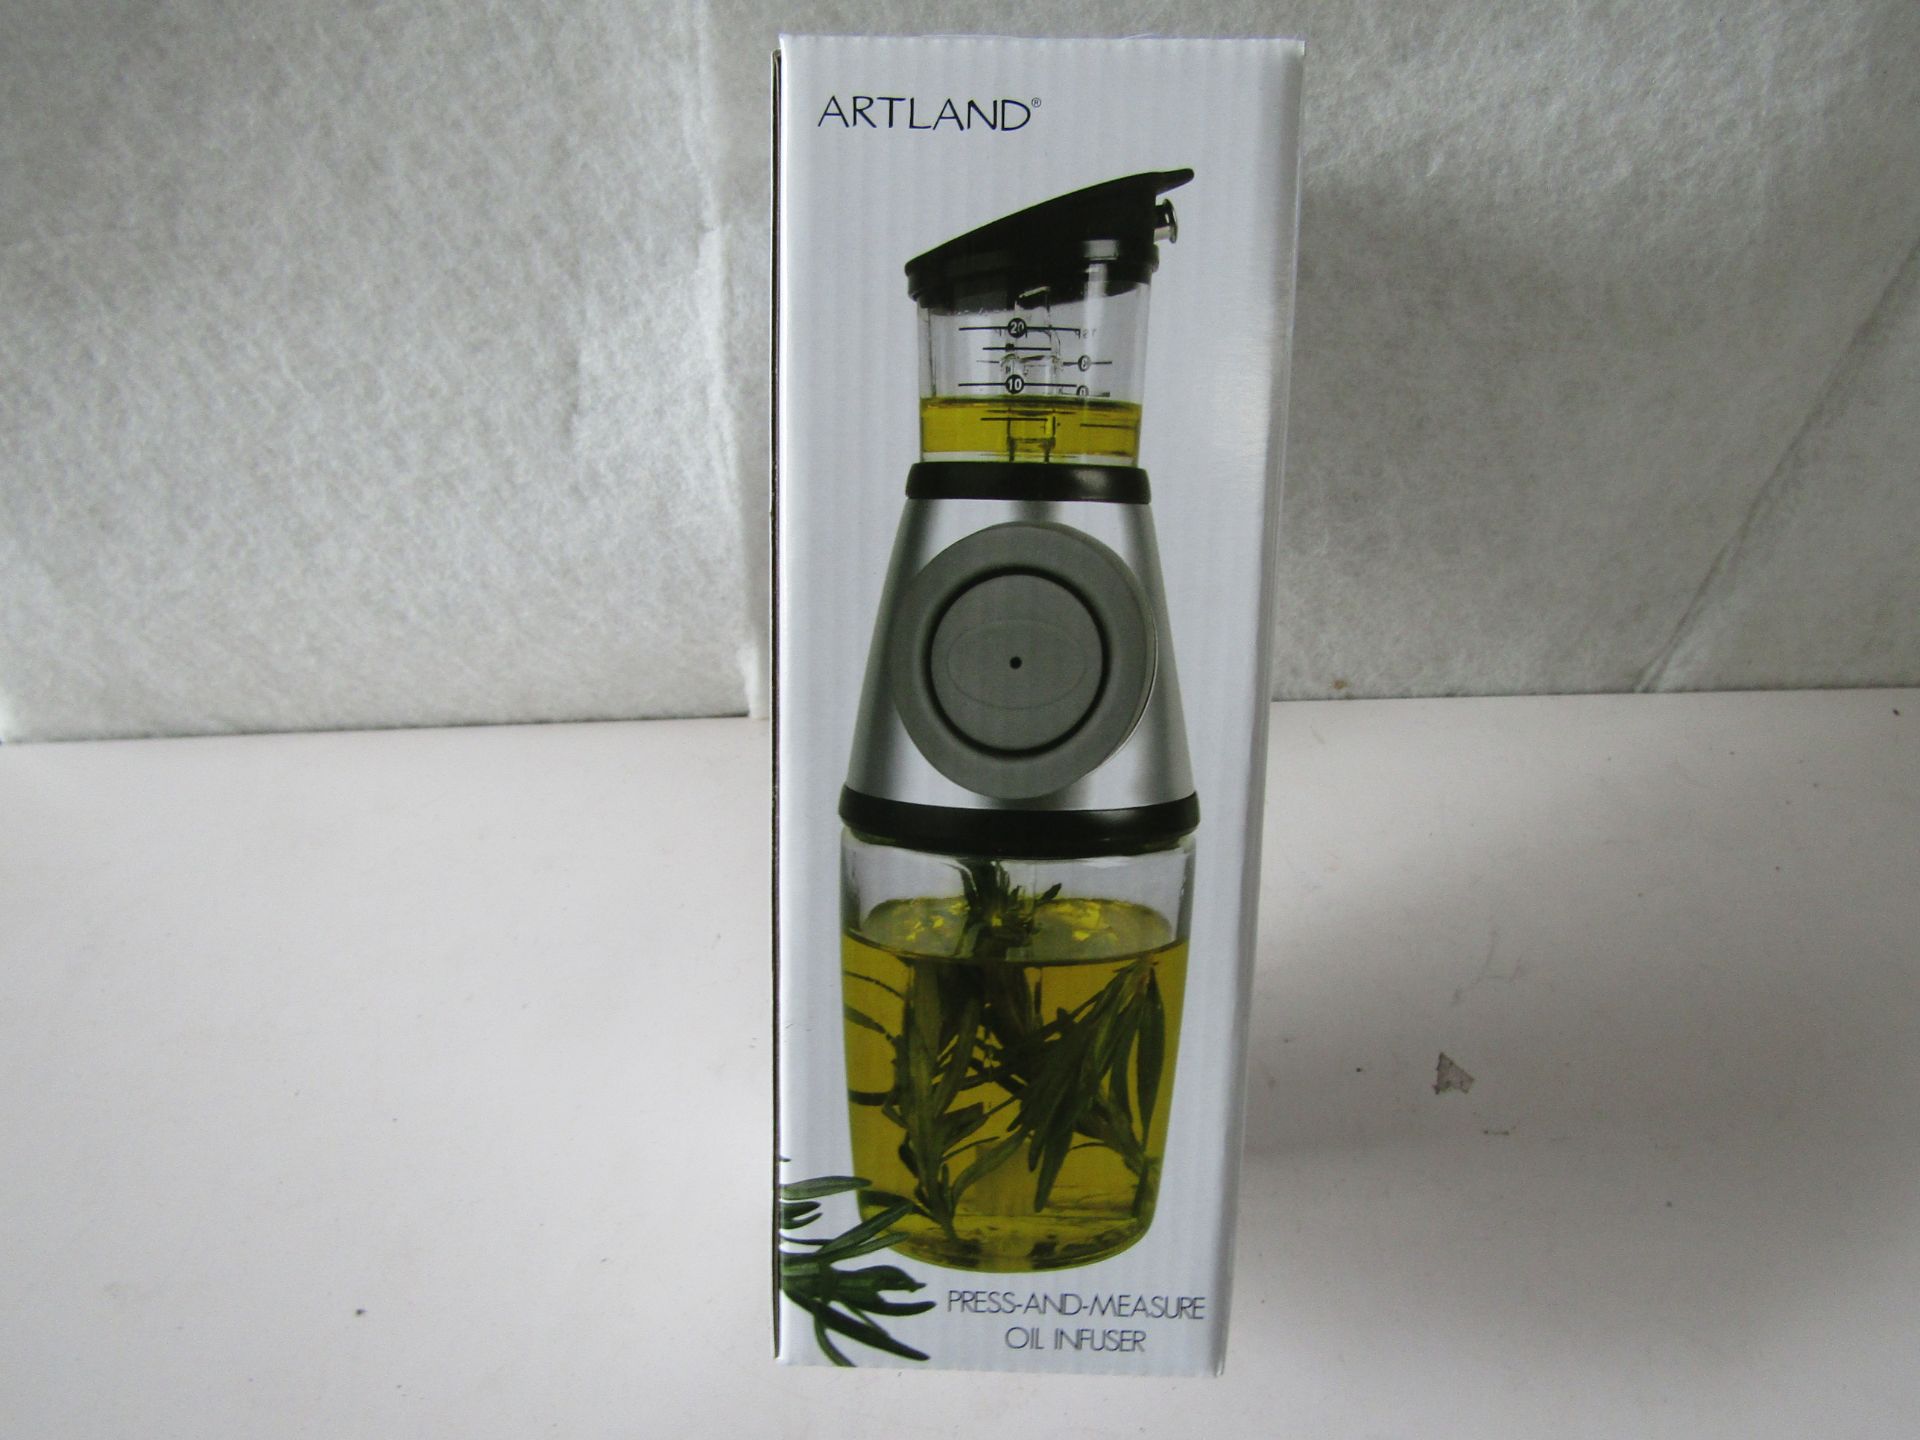 Artland - Press & Measure Oil Infuser 29.5cl - Boxed.